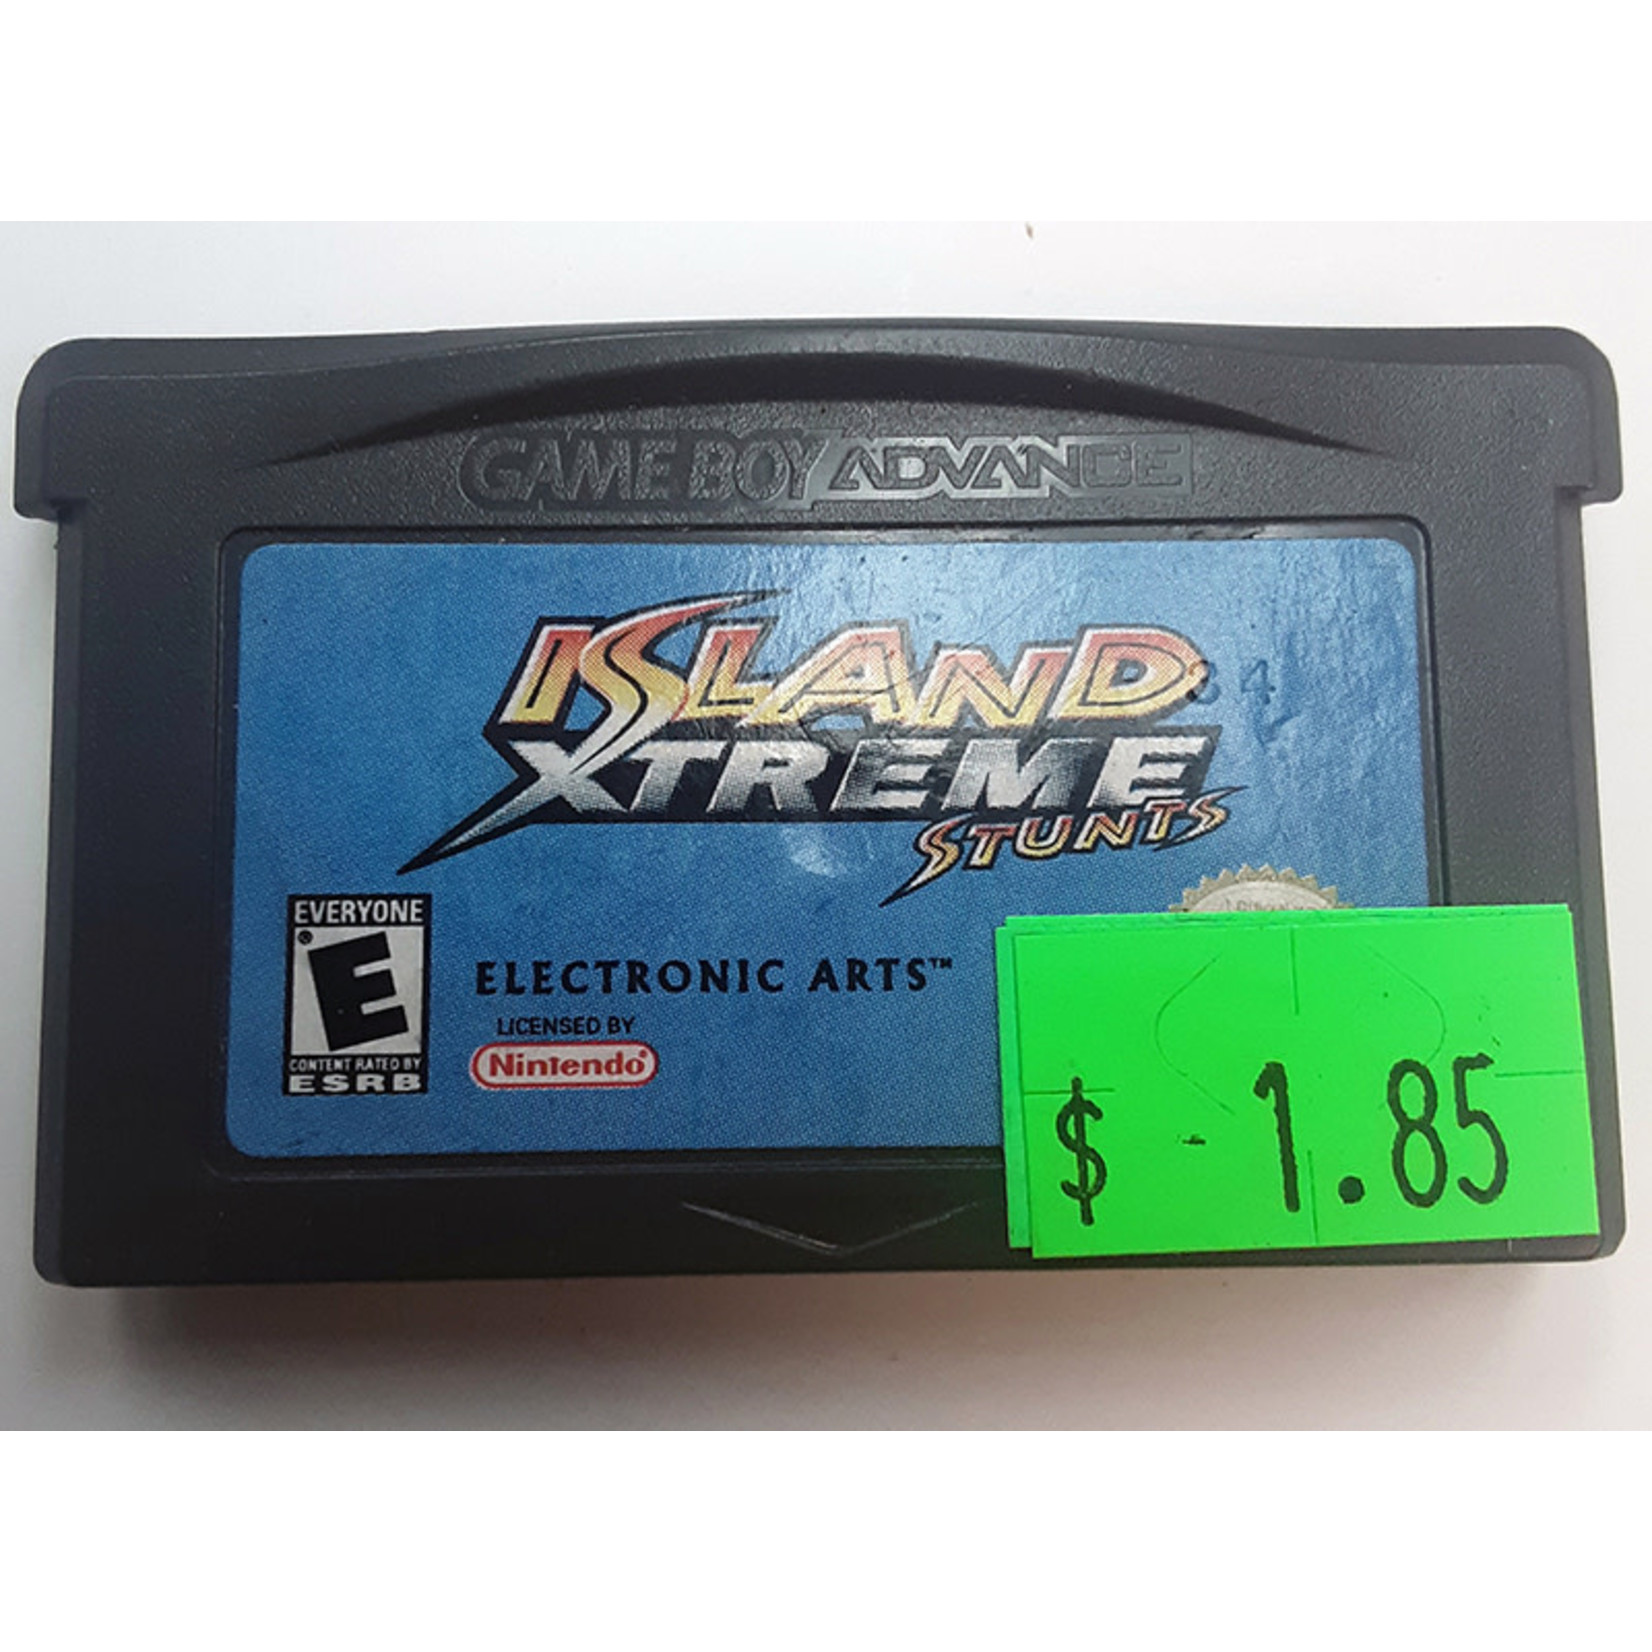 GBAu-Island Xtreme Stunts (cartridge)